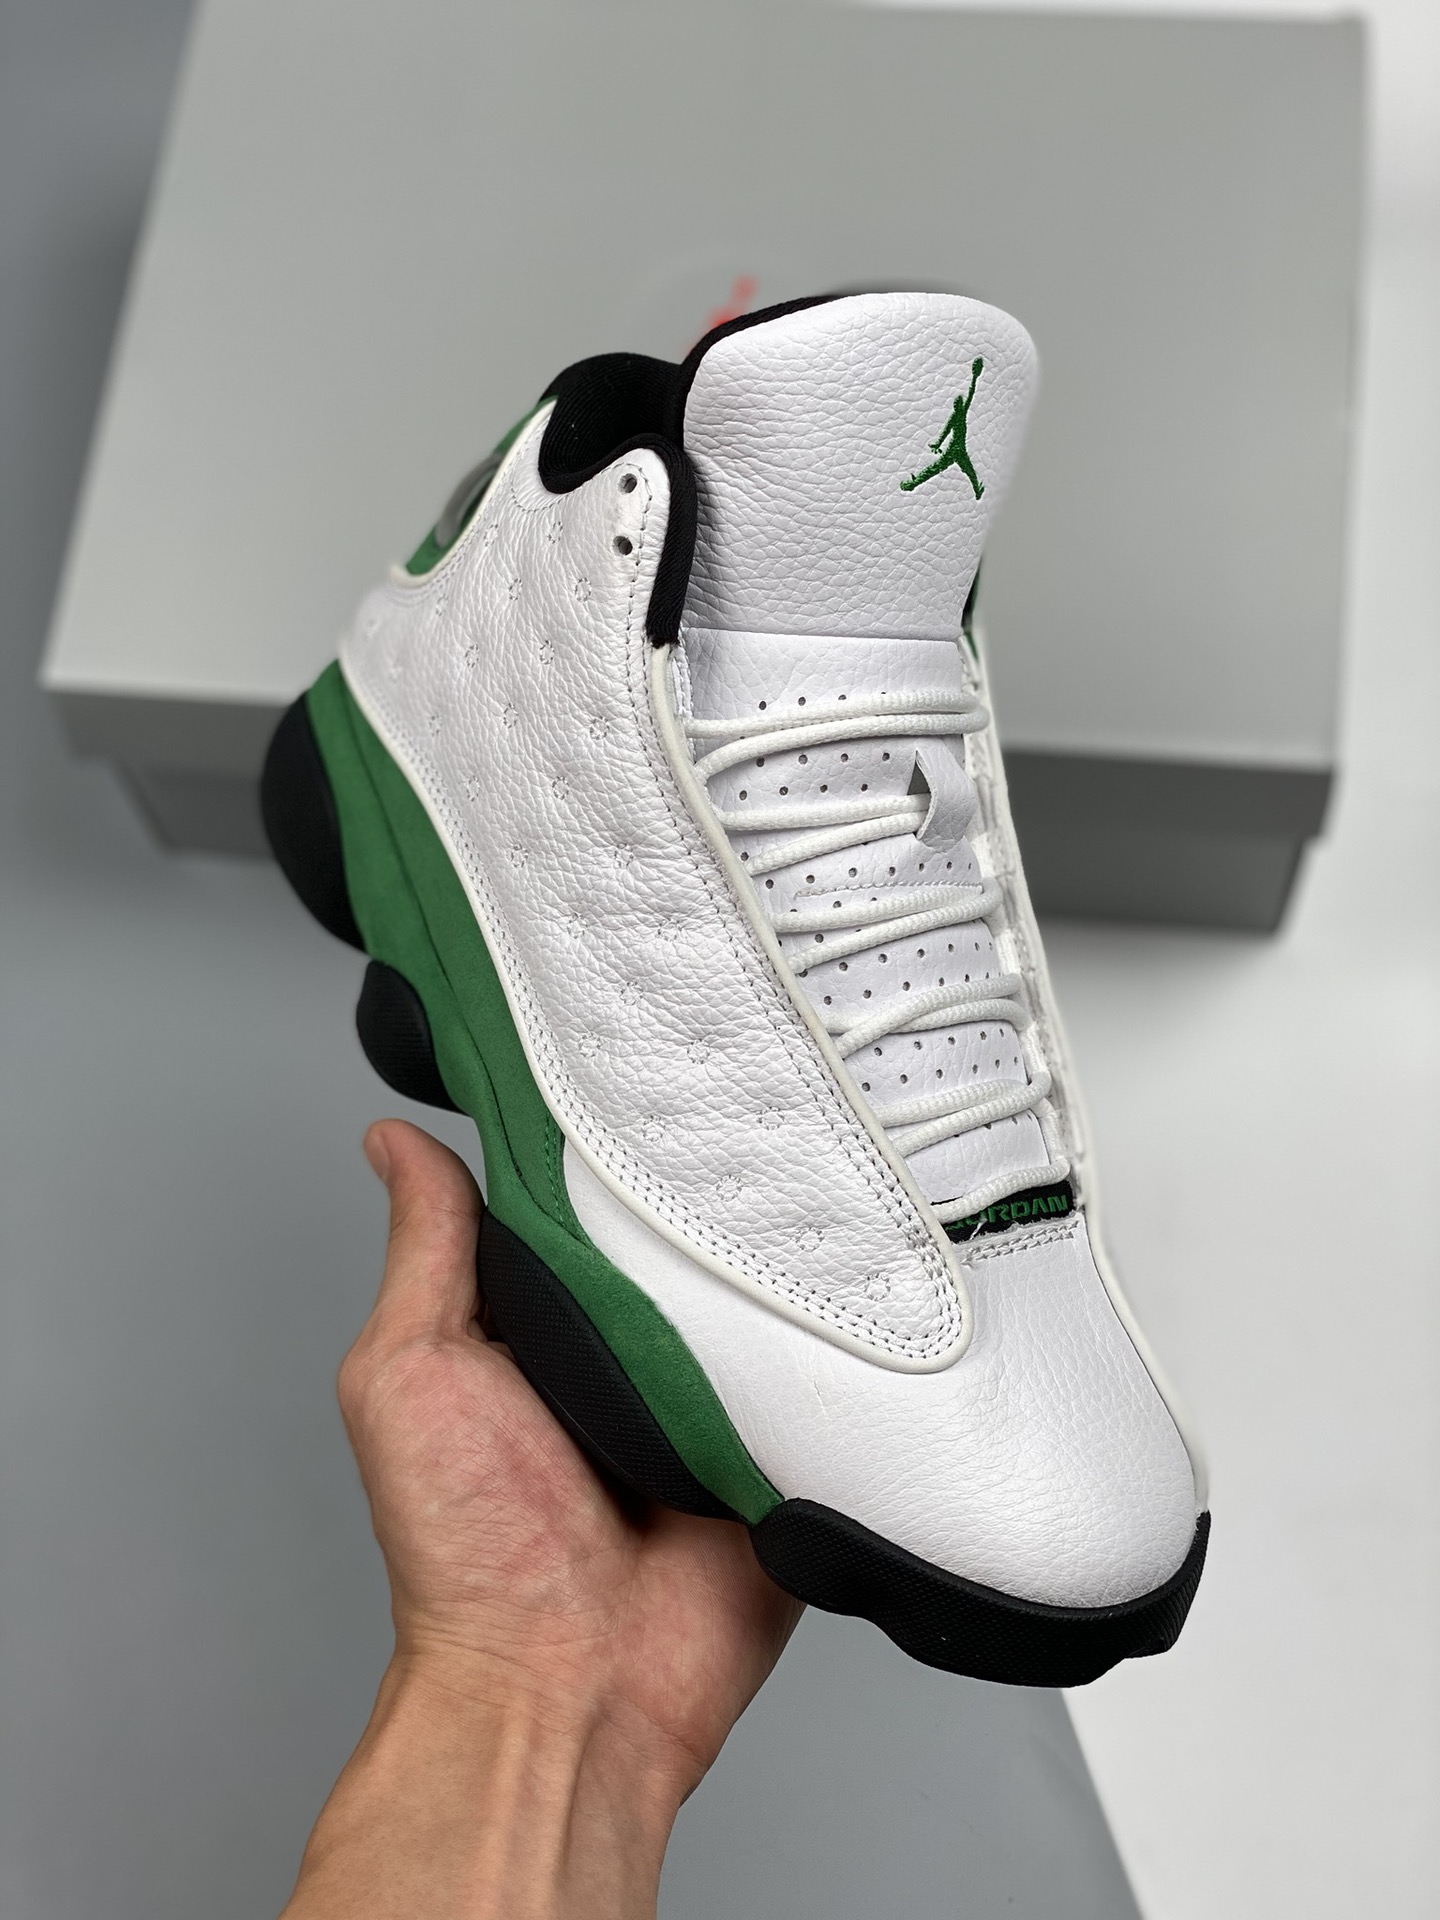 Air JD Jordan 13 "Lucky Green" DB6537-113 Shoes